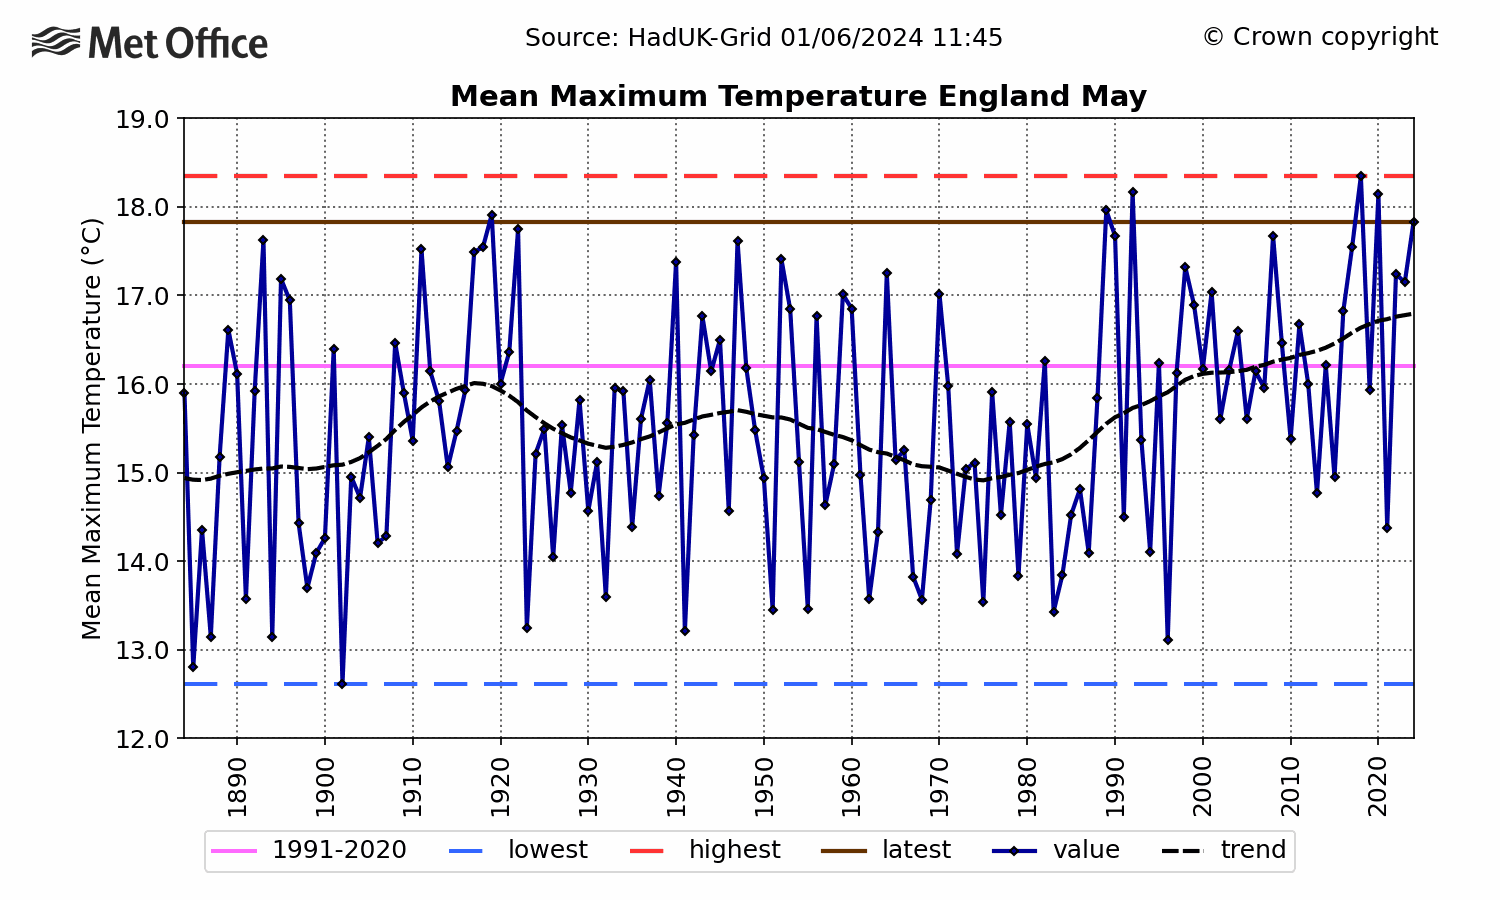 England Mean daily maximum temp - May